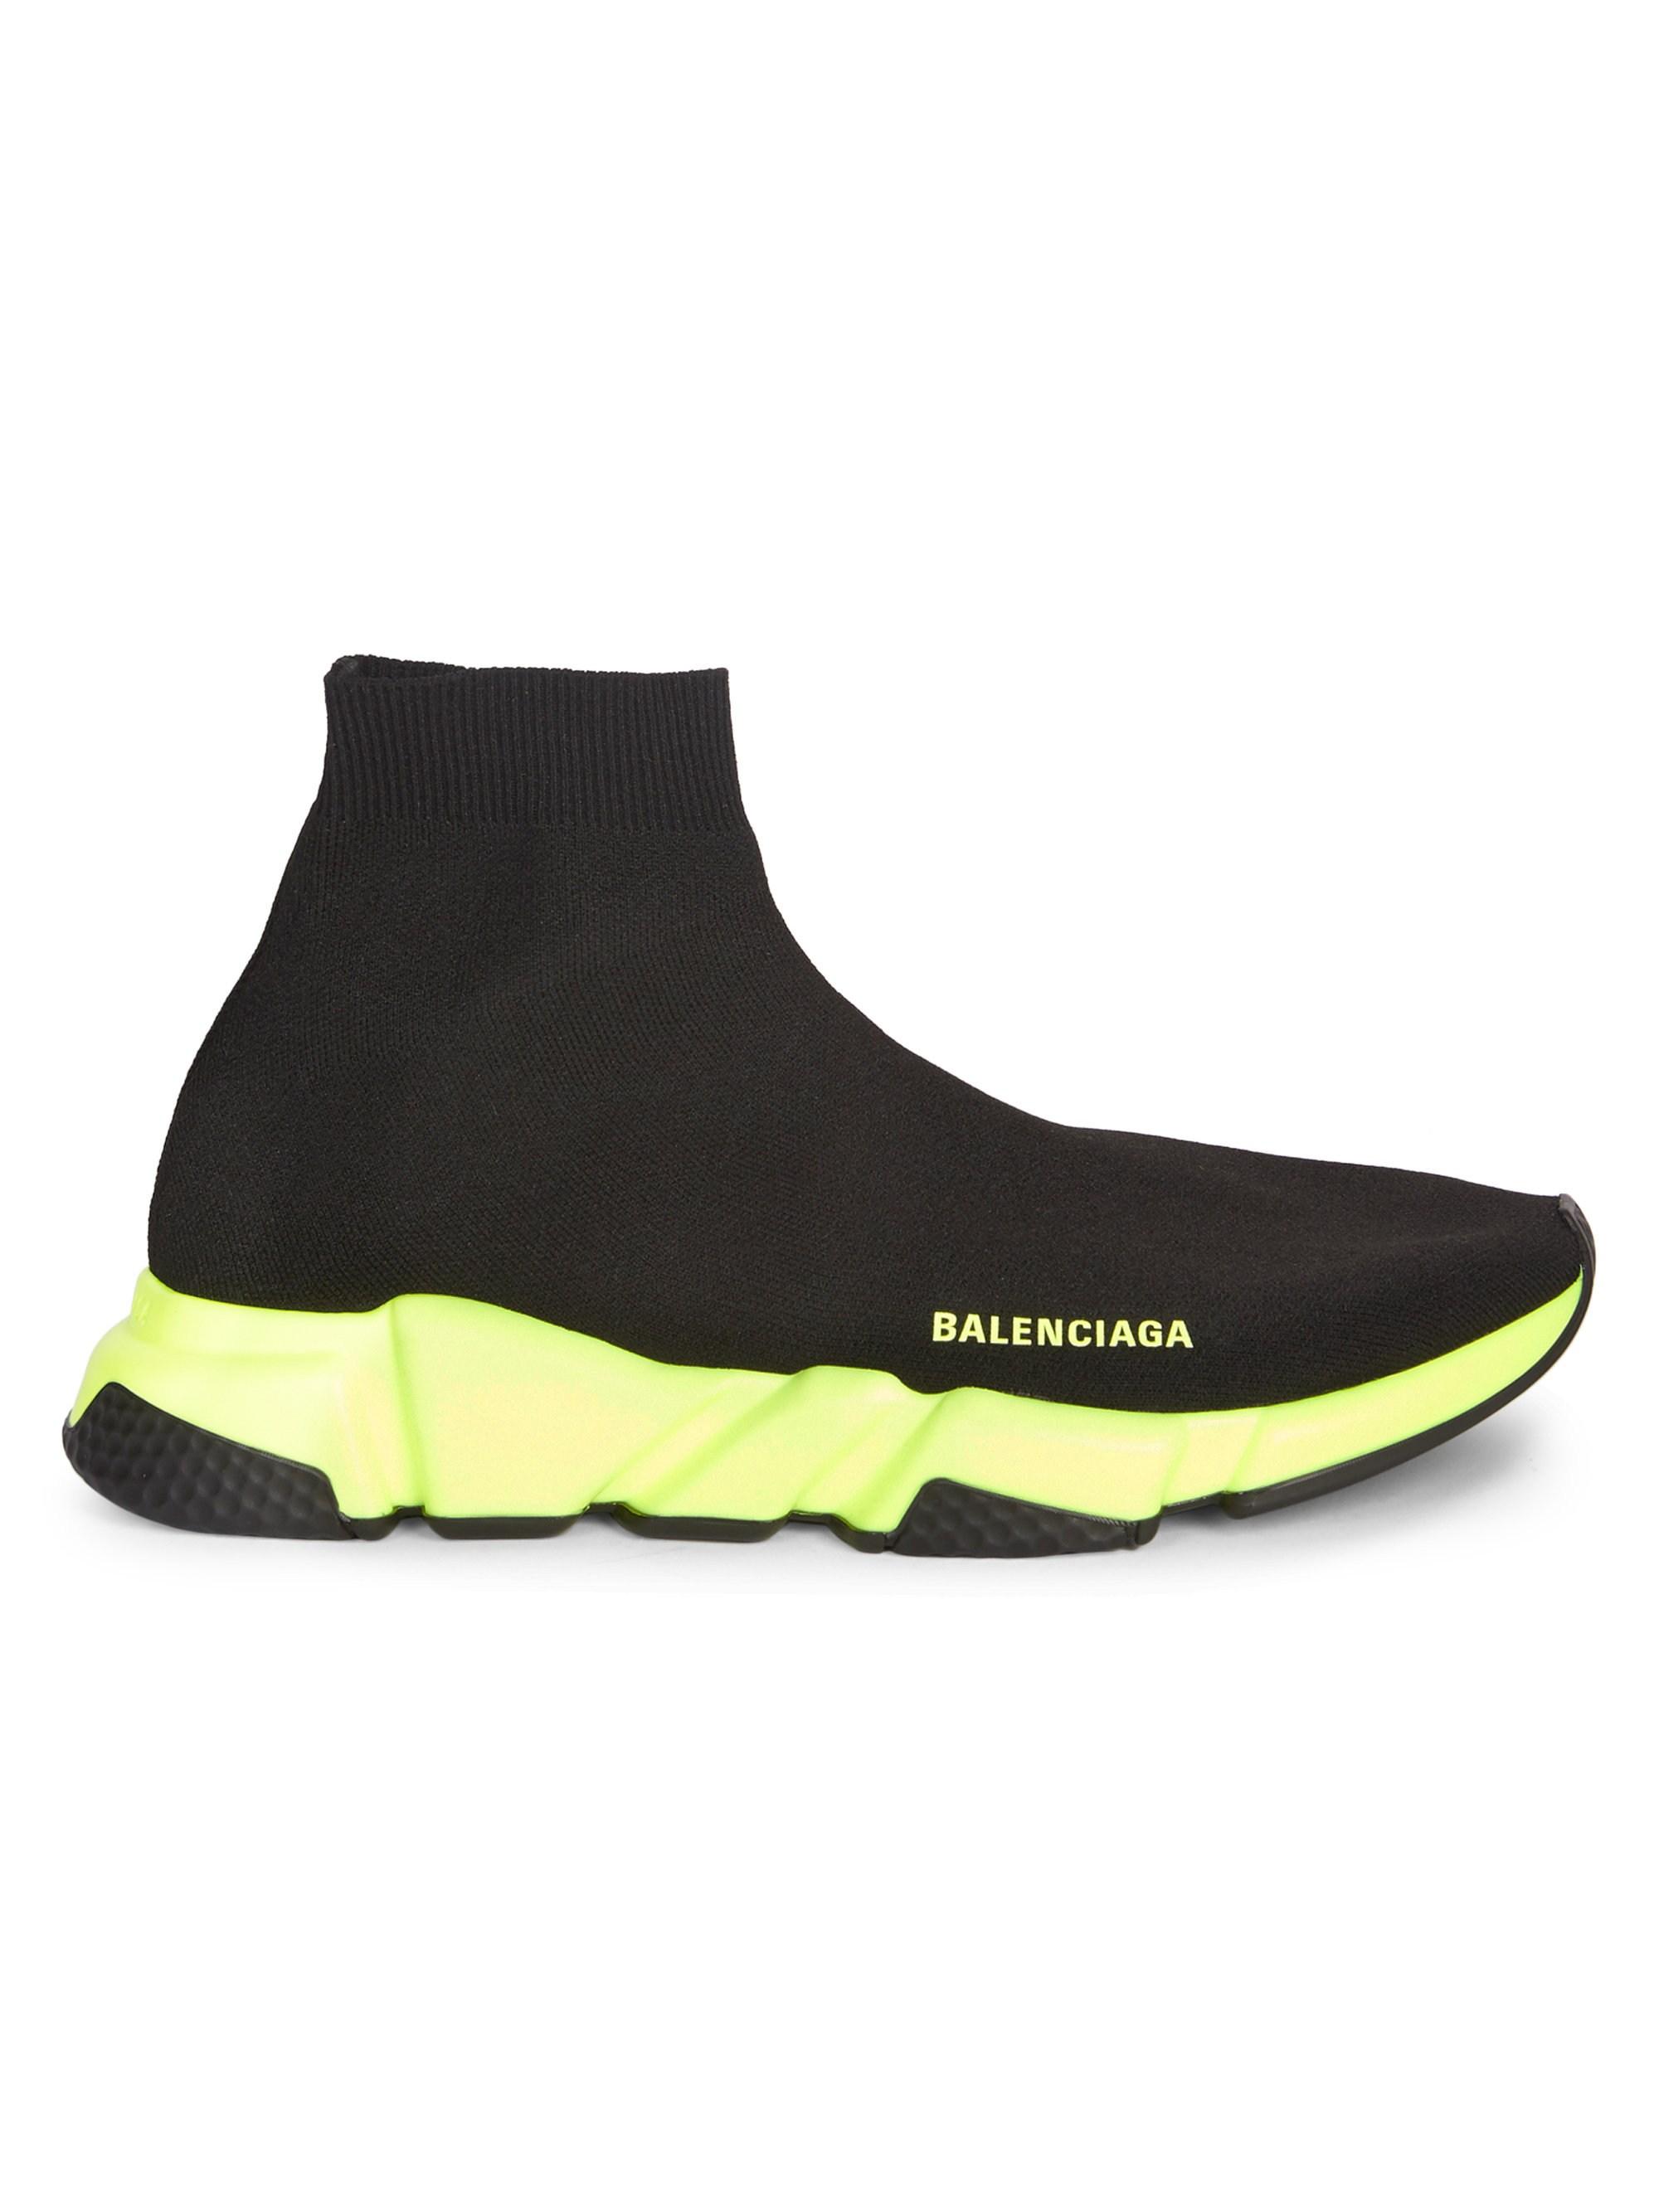 Balenciaga Speed Trainer Sock Sneakers in Black for Men - Lyst